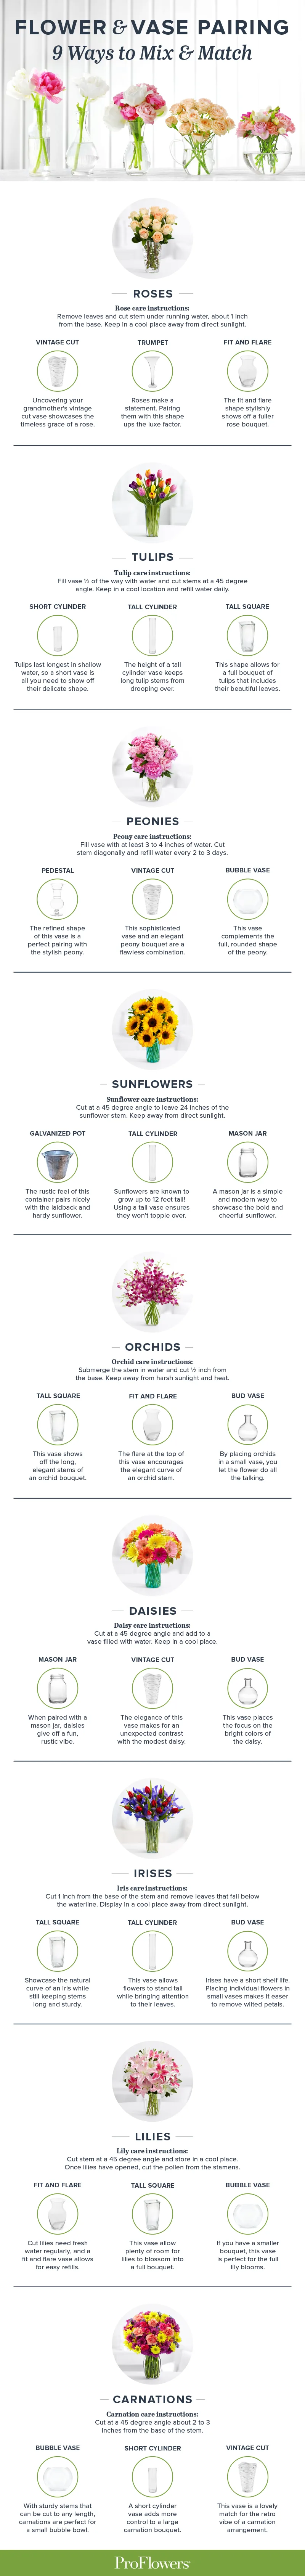 Flower & Vase Pairing: 9 Ways to Mix & Match